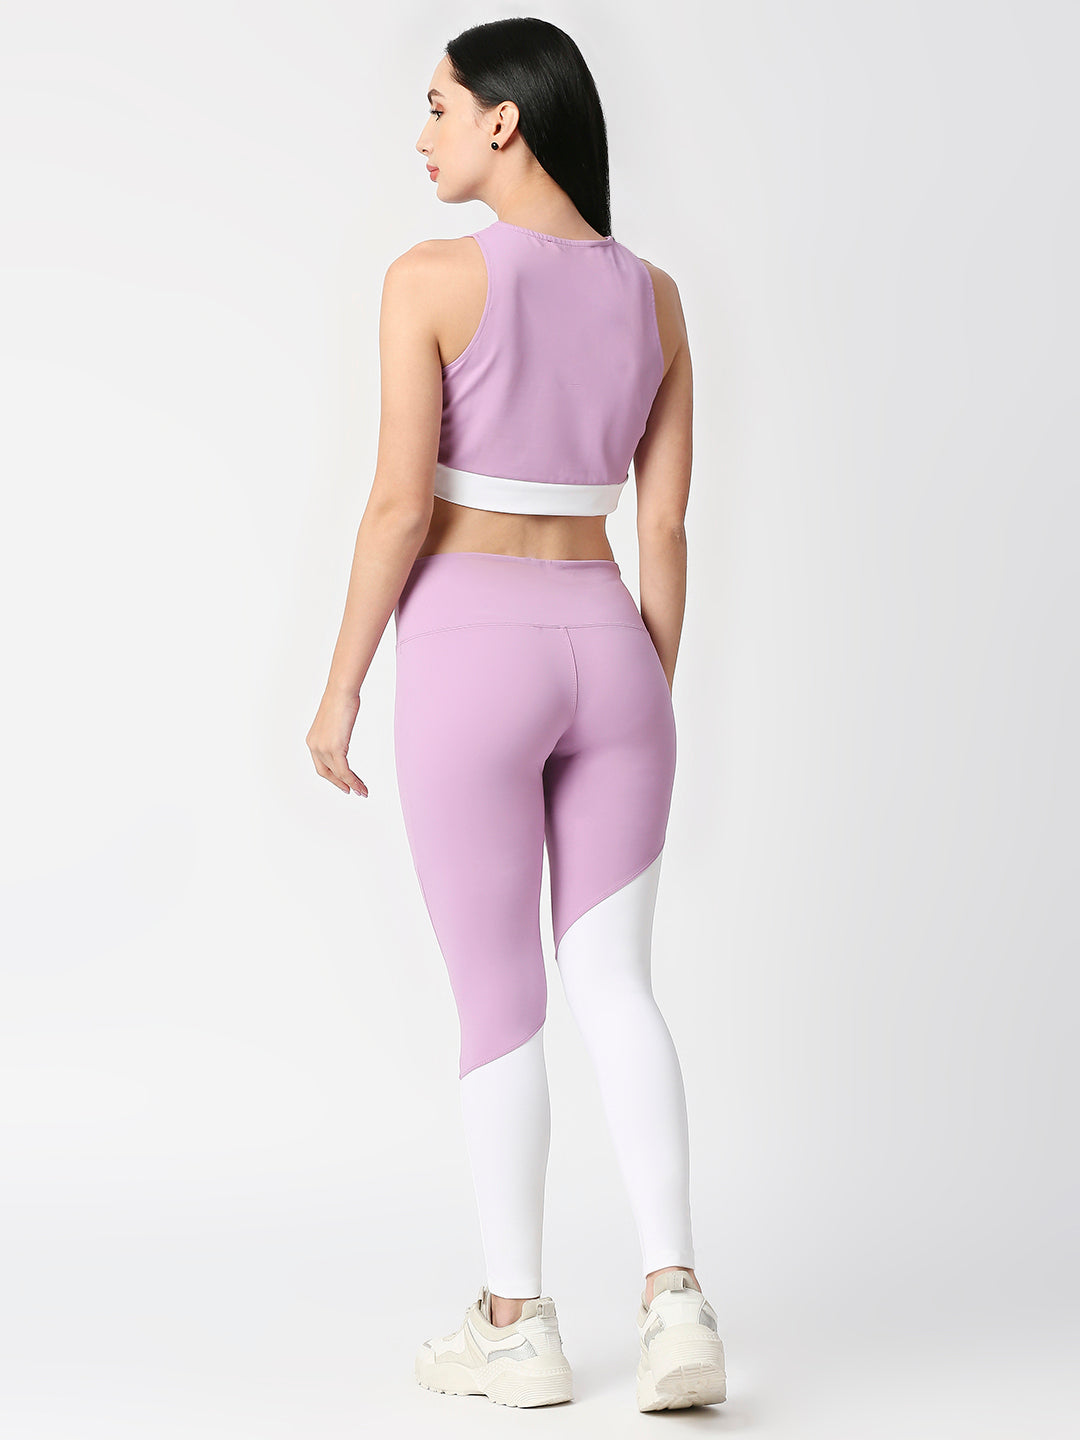 Shop Blamblack Women's Lavender and white color GYM Wear Co-ords